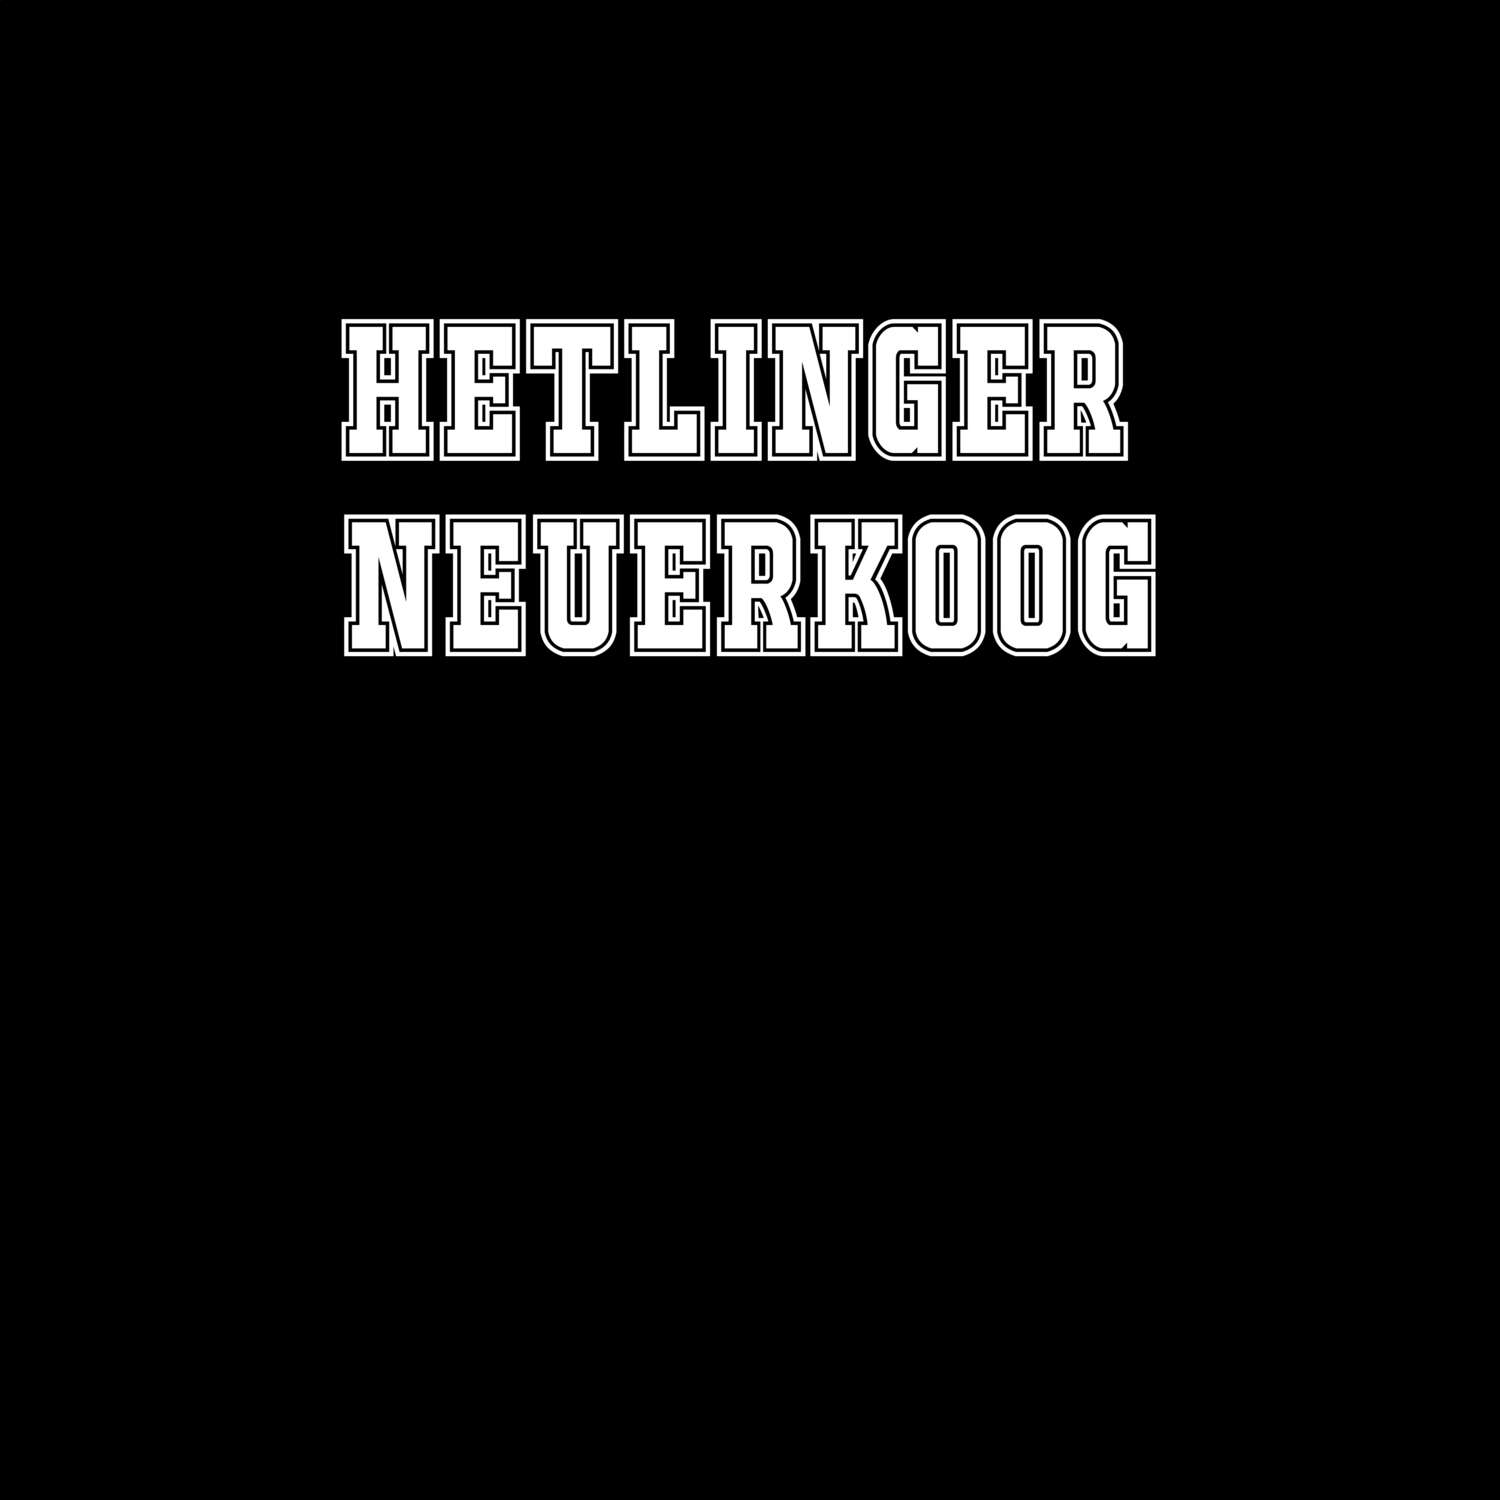 Hetlinger Neuerkoog T-Shirt »Classic«